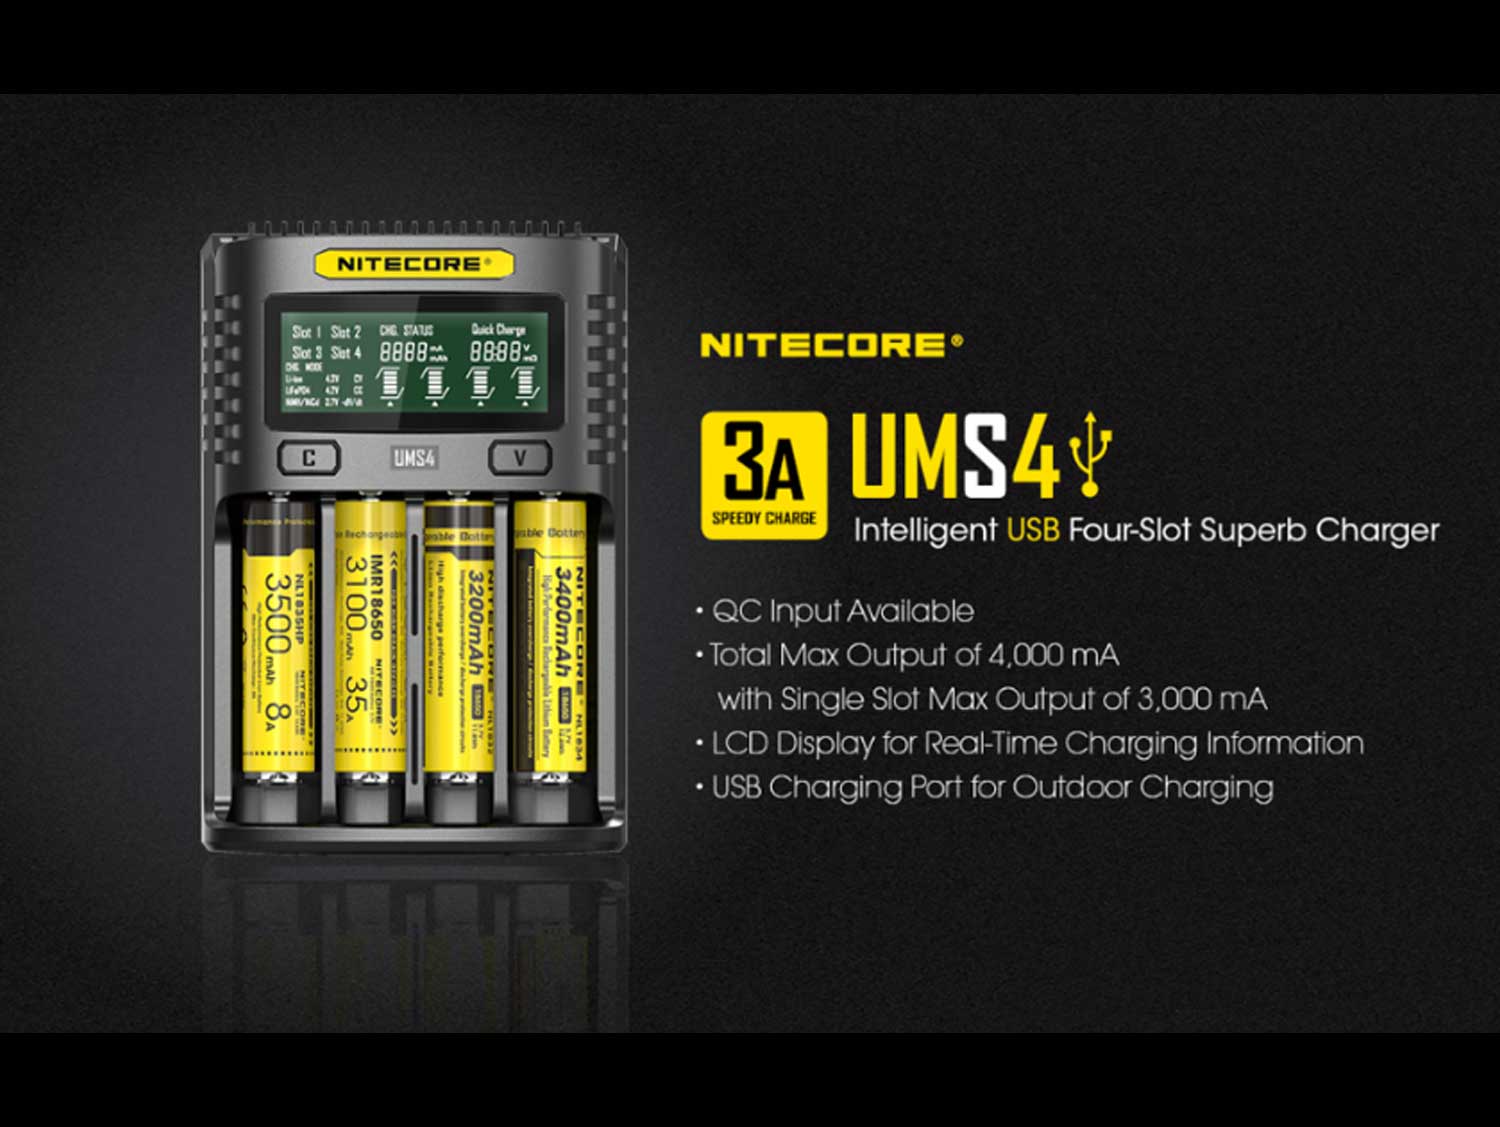 NITECORE USB 4 Slot Universal UMS4 Smart Battery Charger